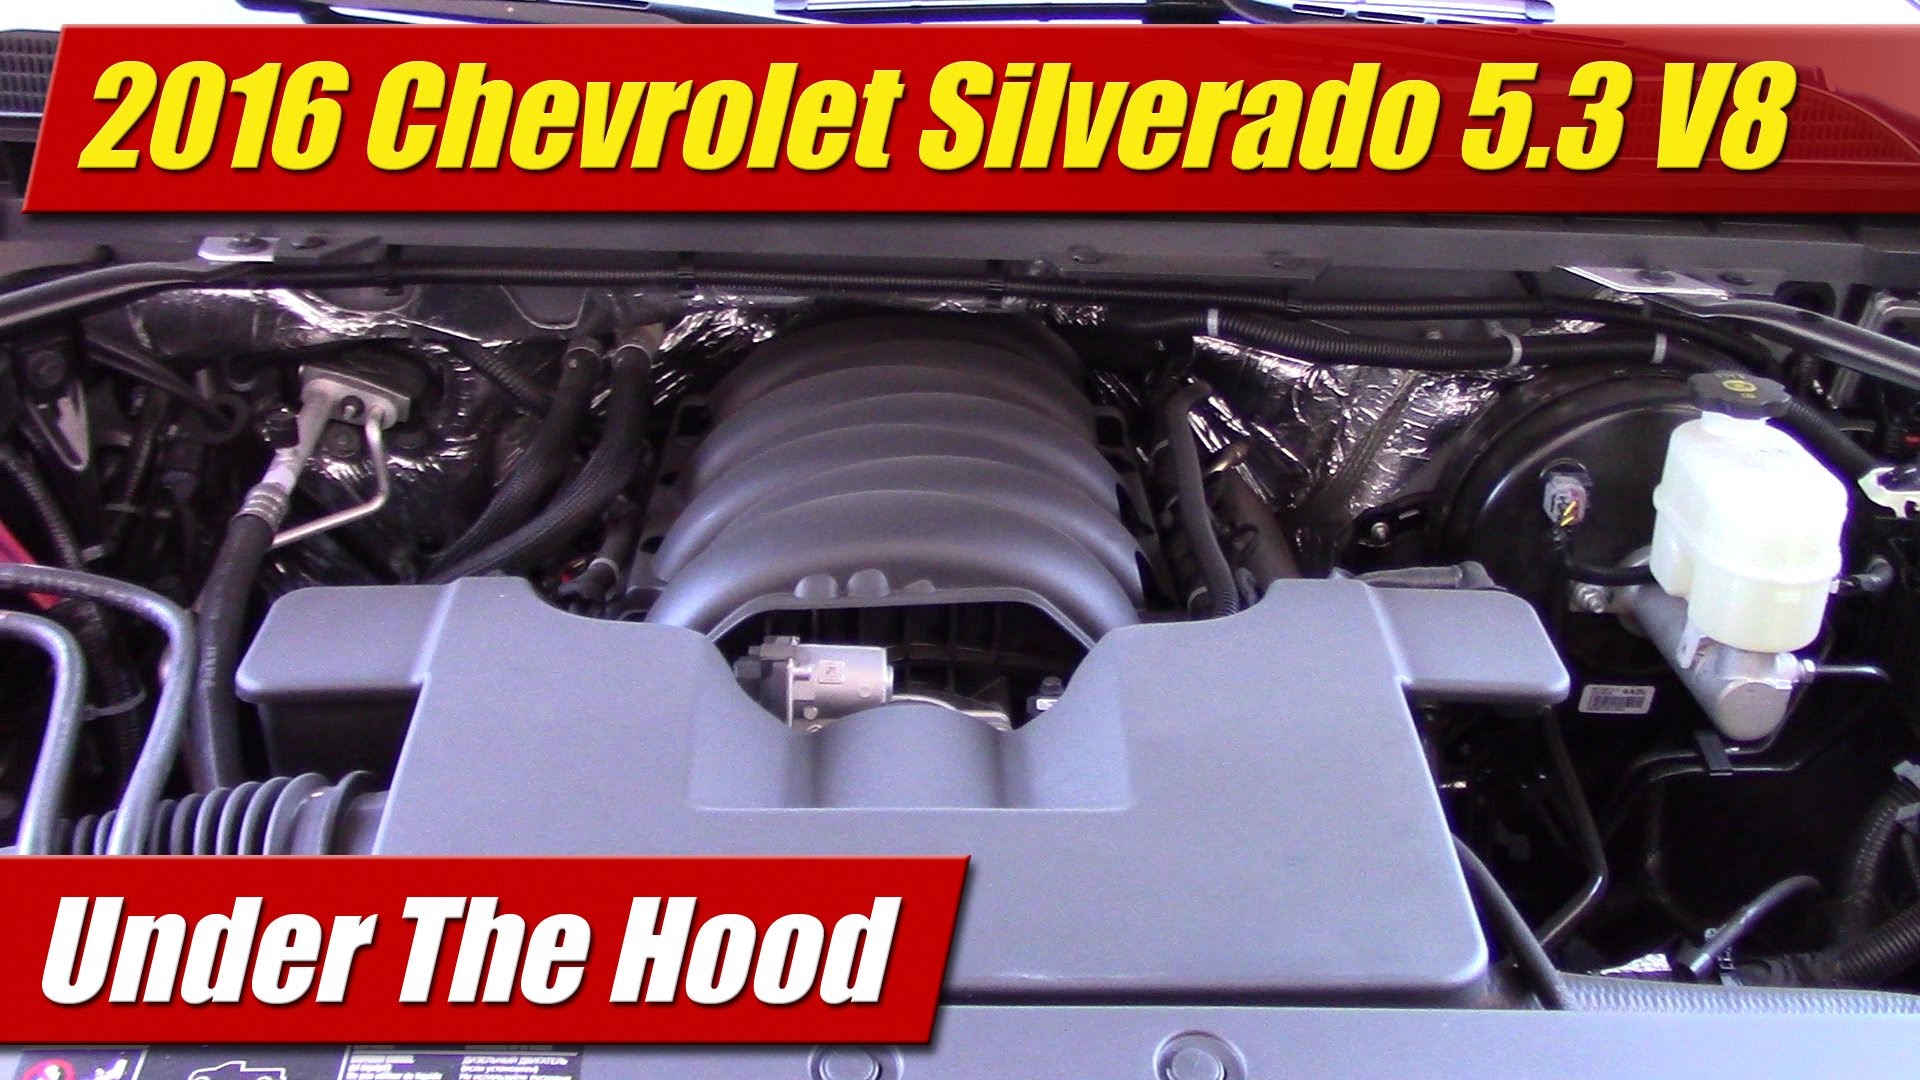 Under The Hood: 2016 Chevrolet Silverado 5.3 V8